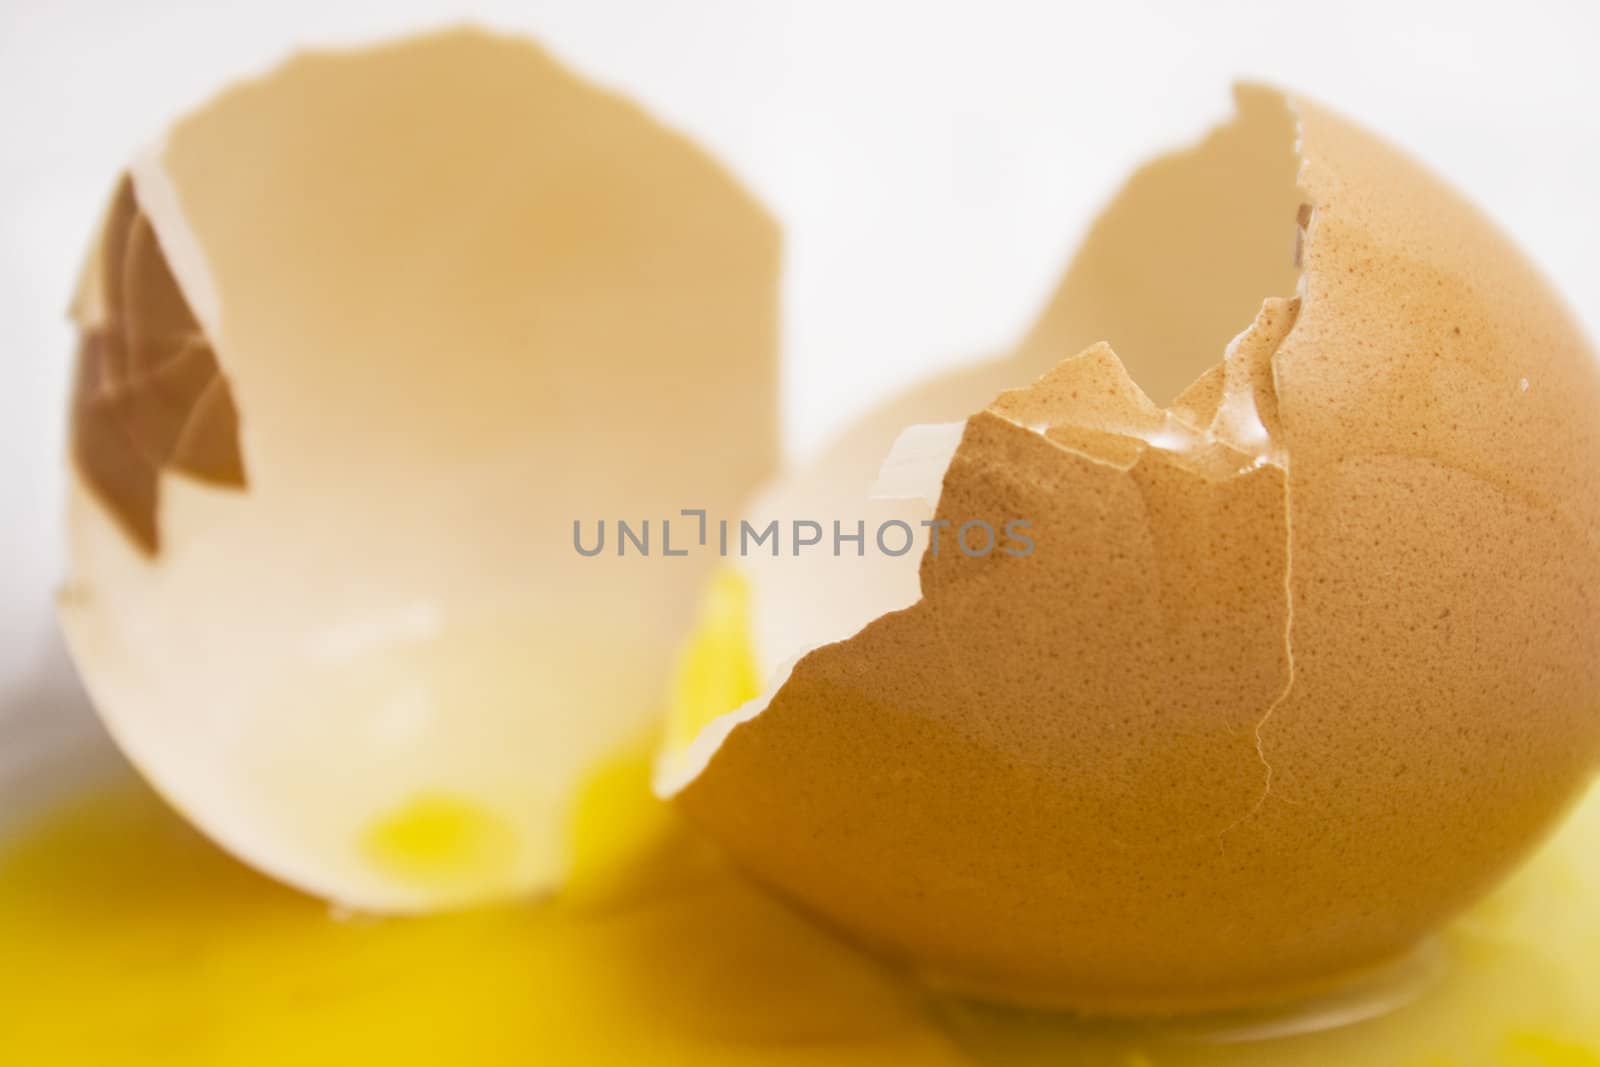 Close-up of a Broken Egg.